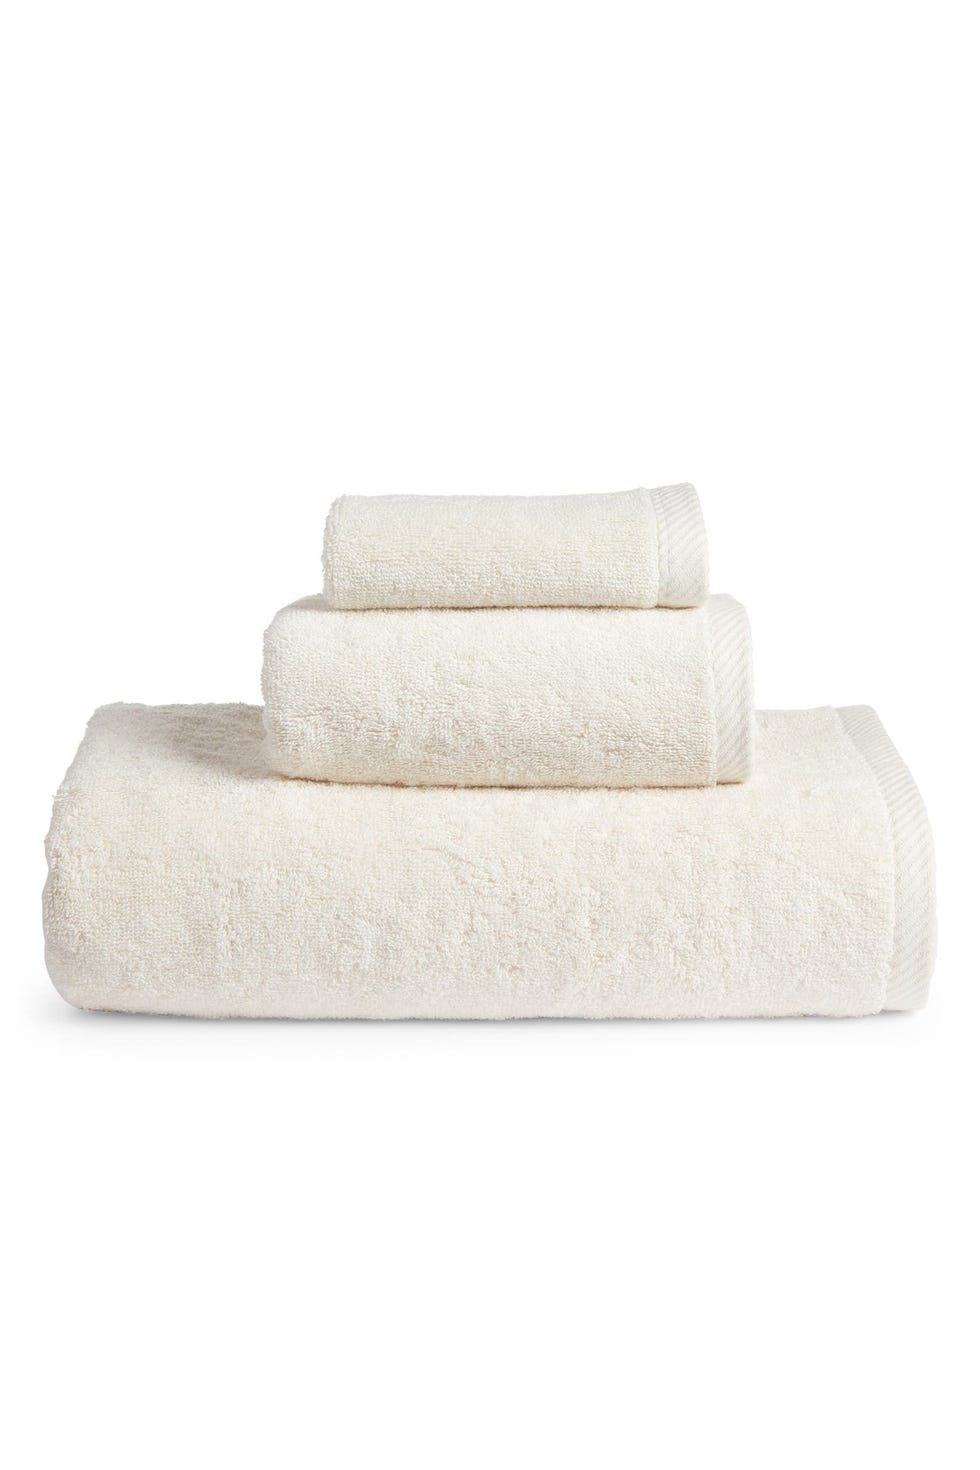 Repreve Bath Towel in Beige Oatmeal 